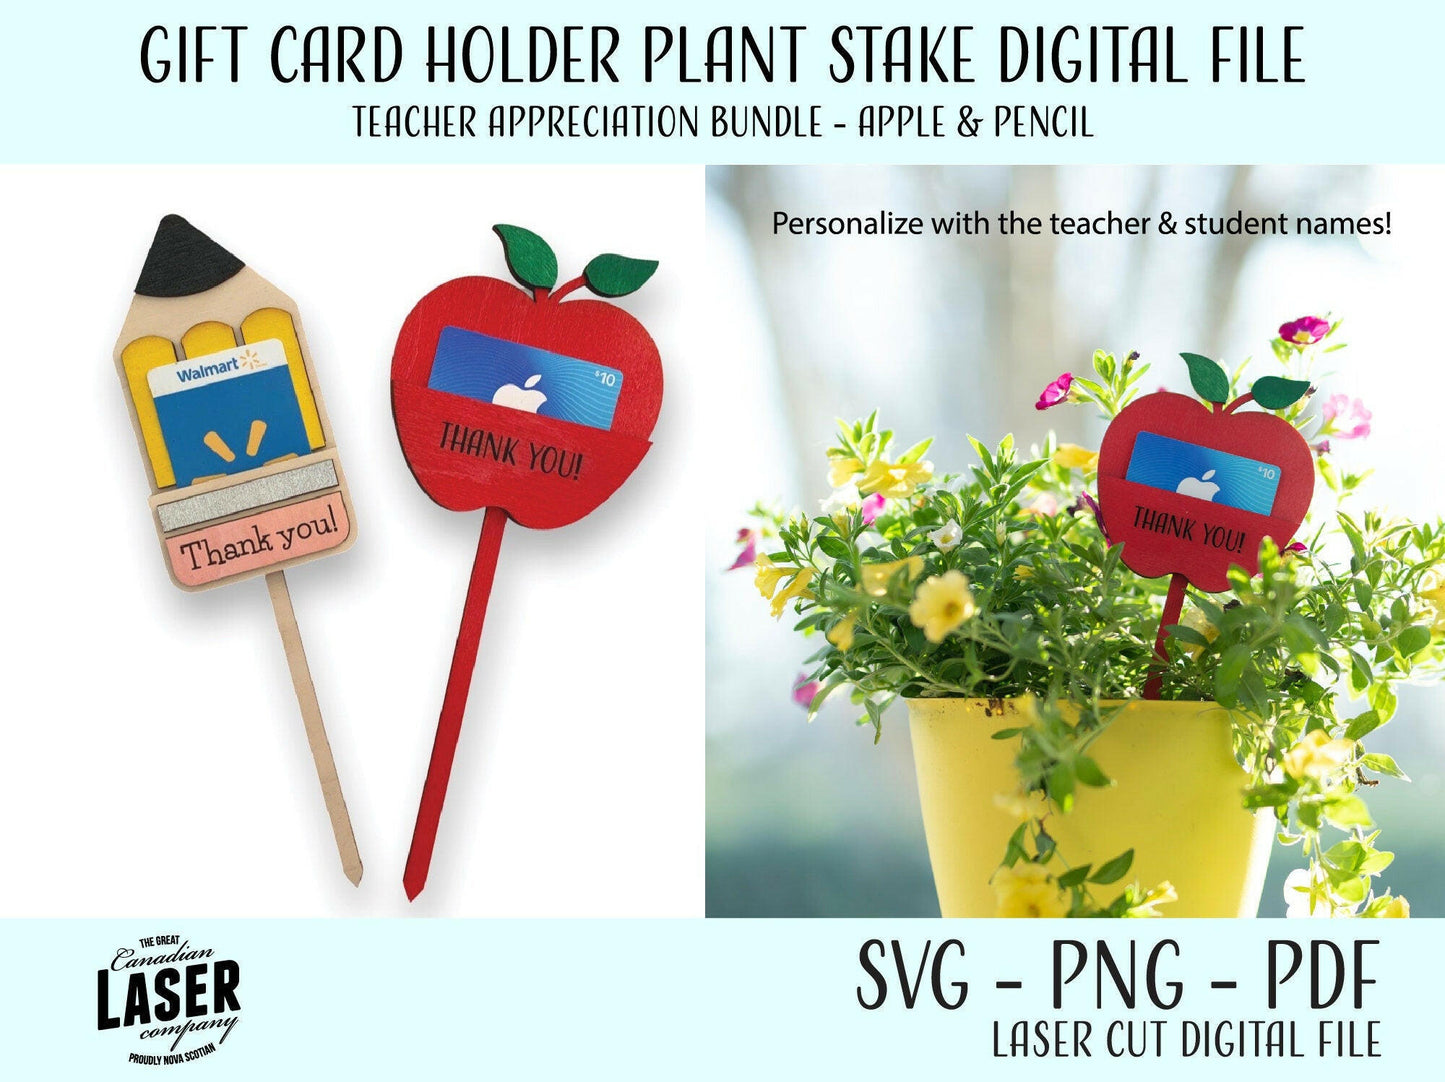 Teacher Gift - Gift Card Holder Plant Stake Digital File, Laser Ready SVG, PNG